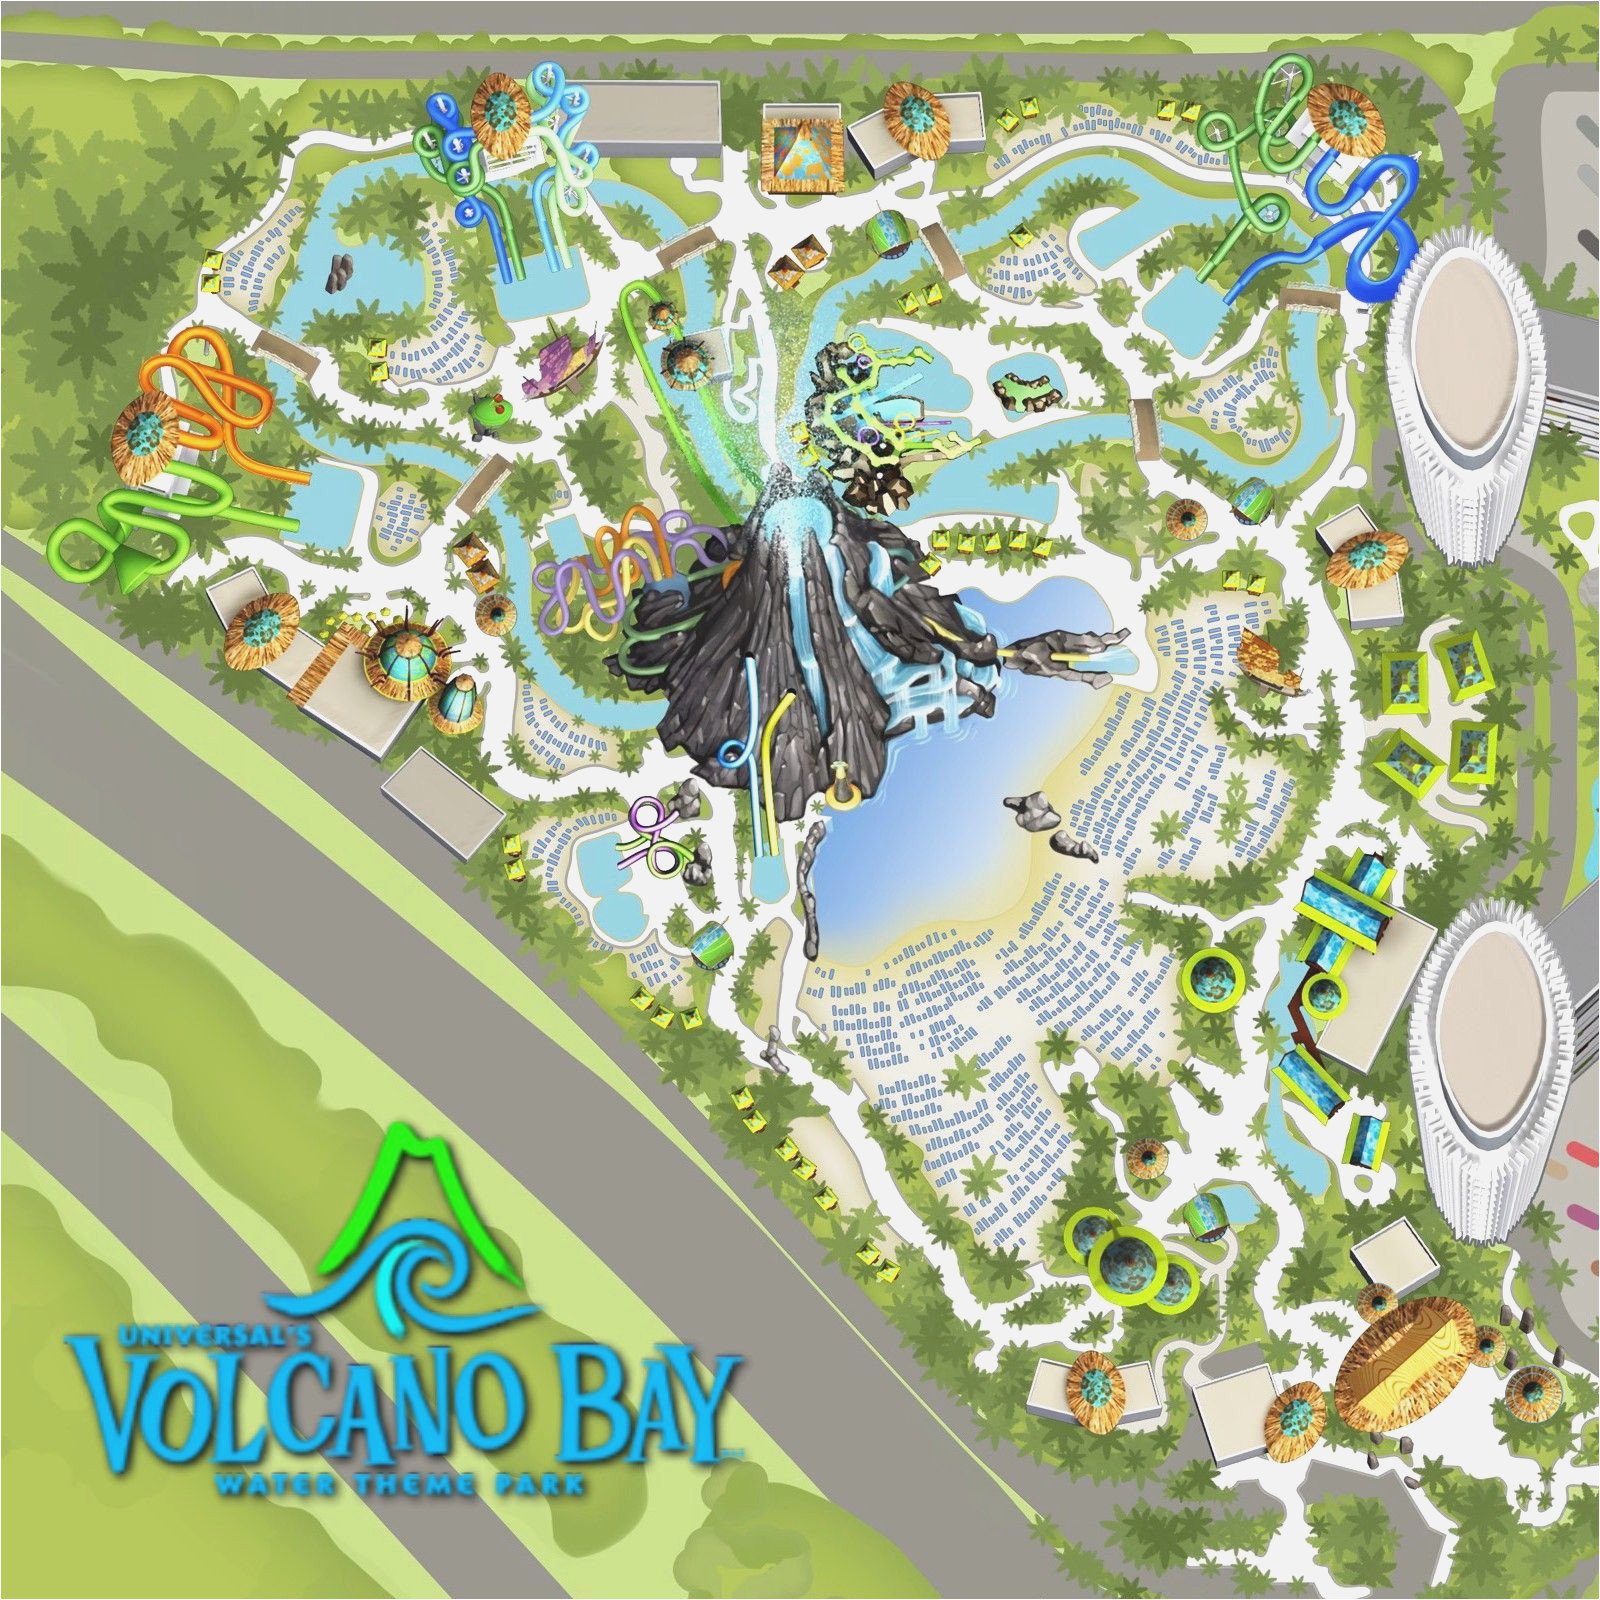 Mapa Universal Studios Orlando Volcano Bay is made up of four immersive